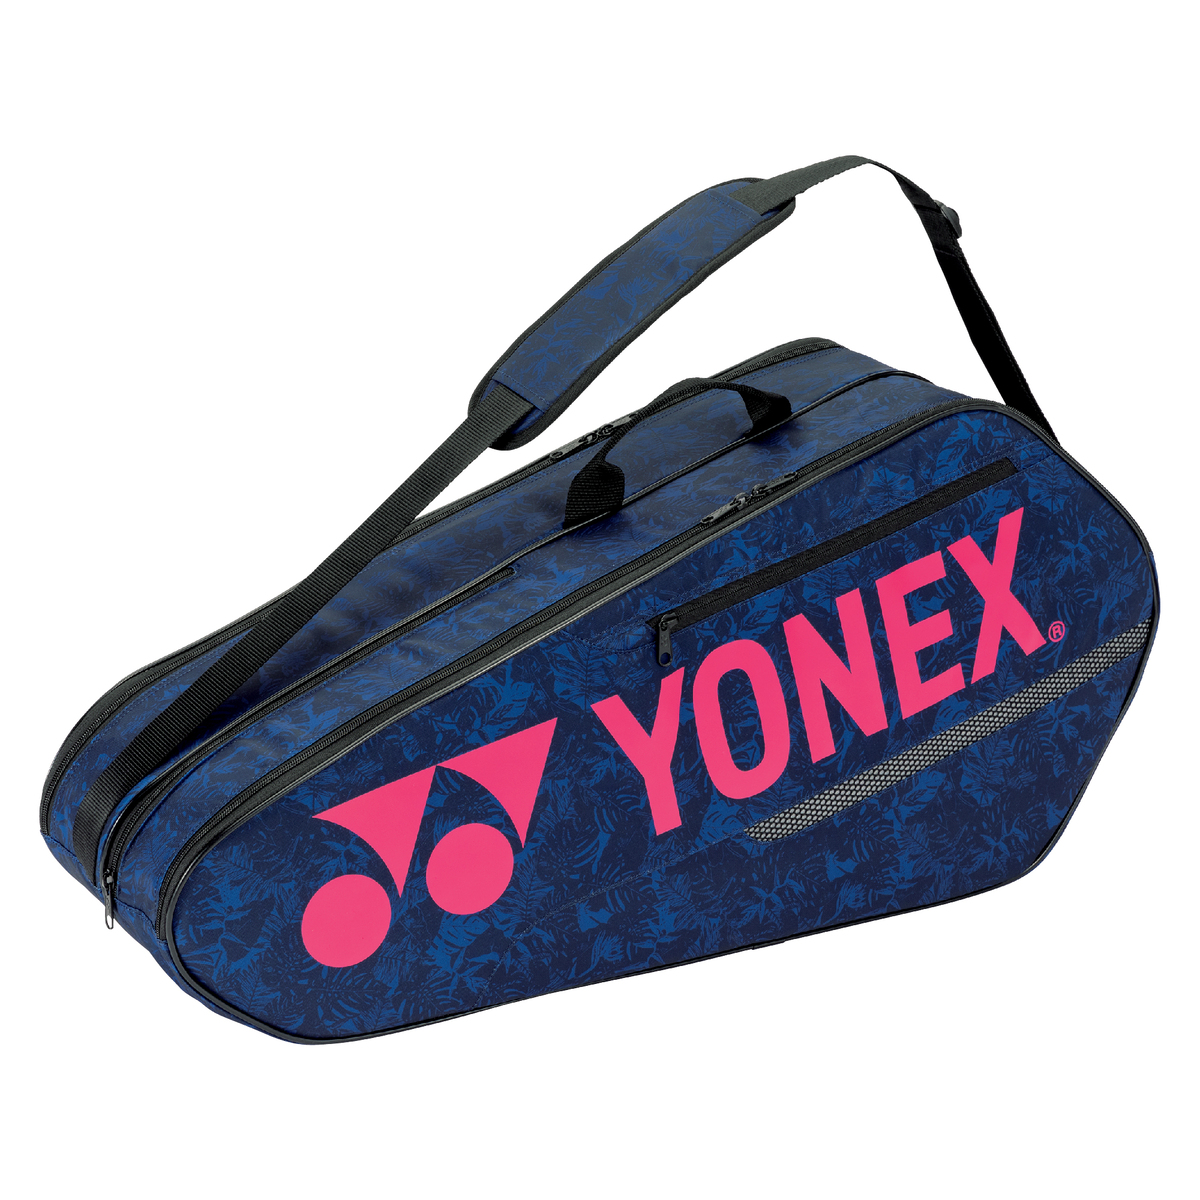 Yonex Badminton Racket Bag BA42126EX Navy Pink ( 6 Racket Bag )